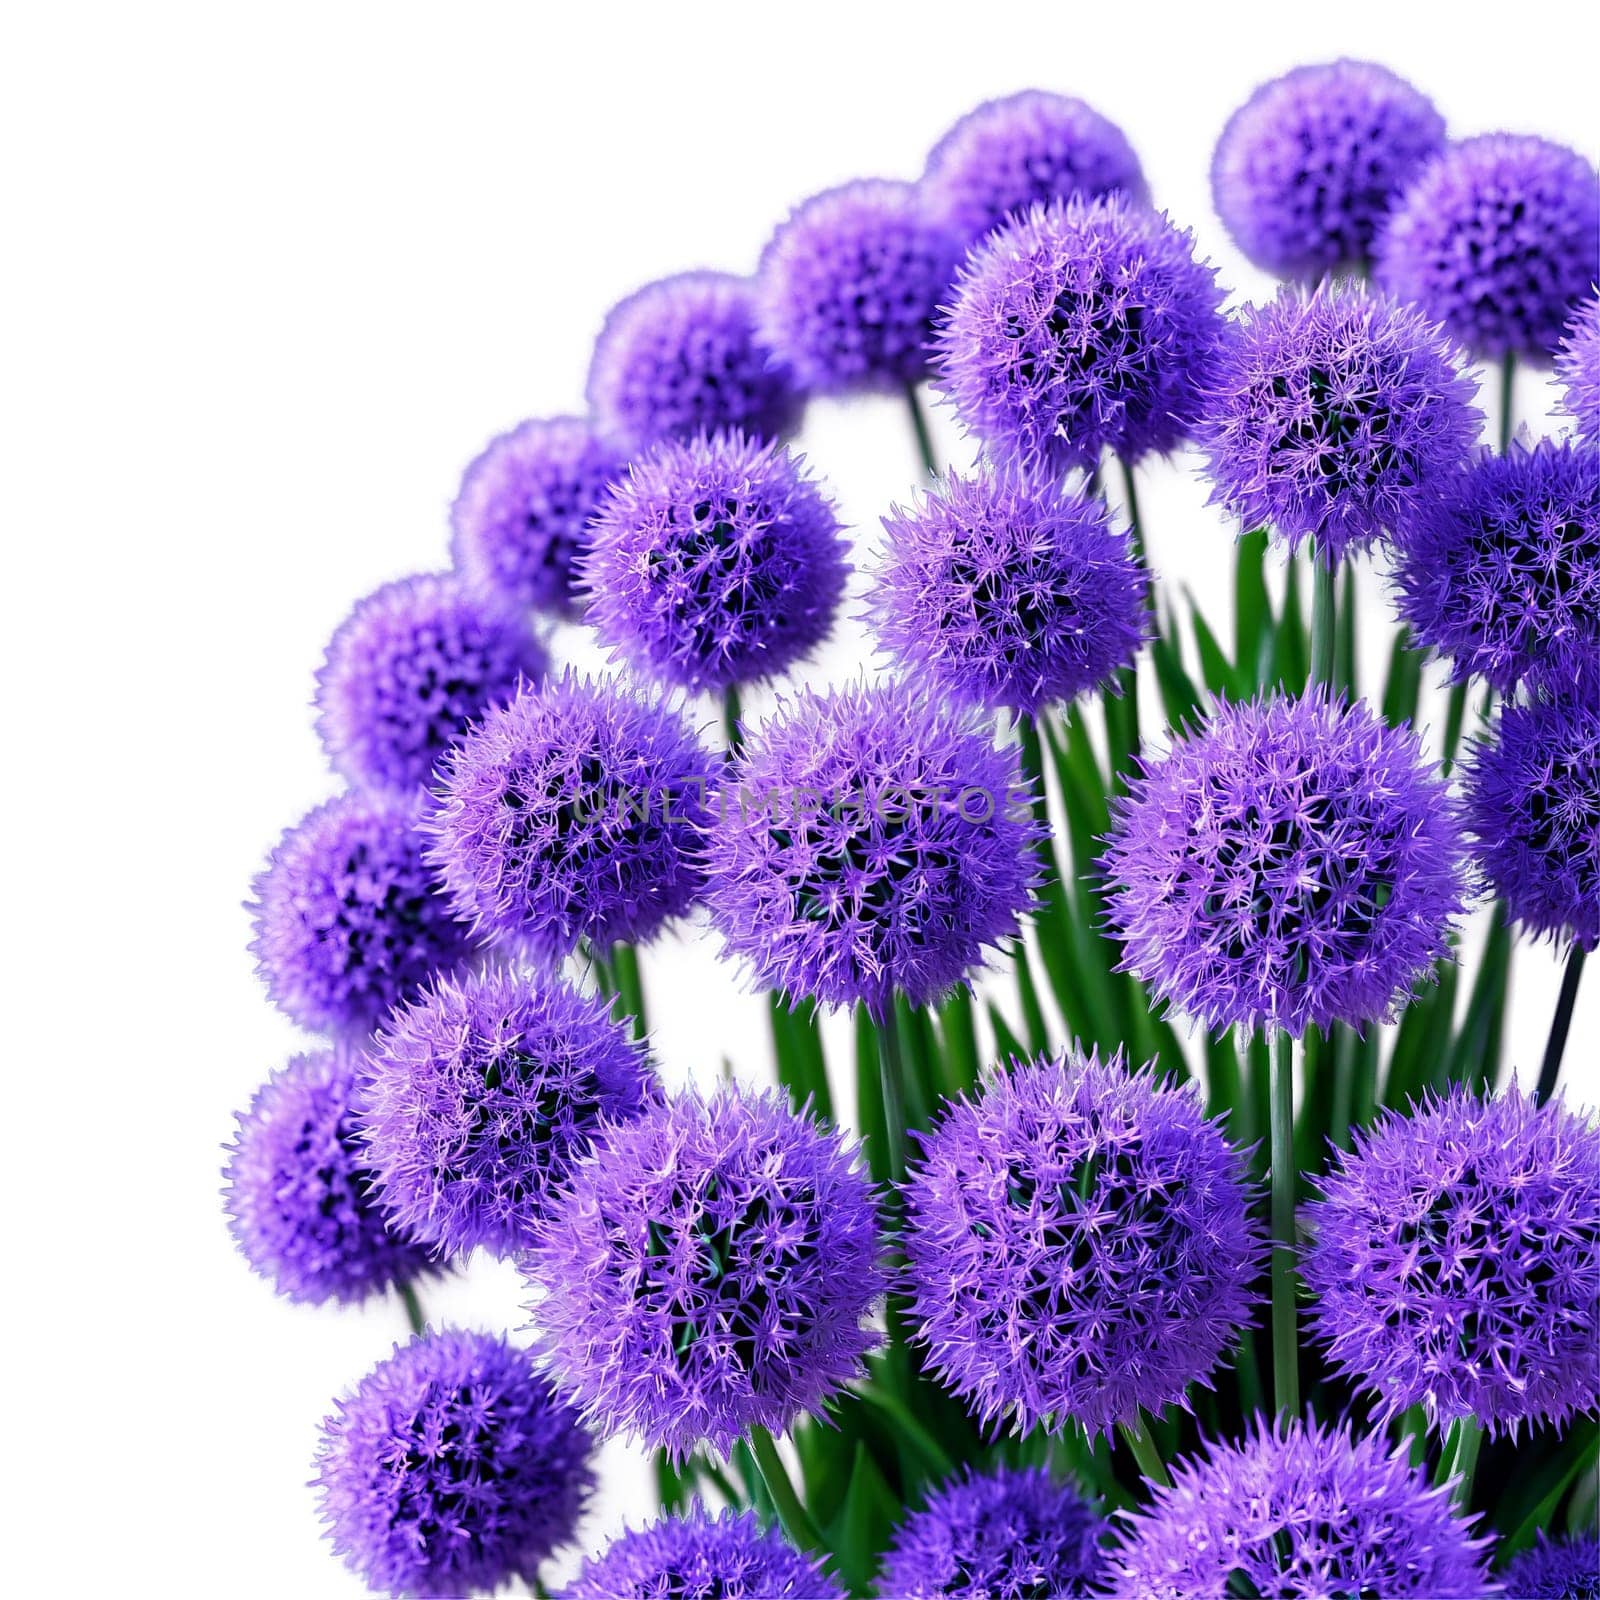 Purple allium dense spherical clusters of small star shaped flowers Allium giganteum by Matiunina